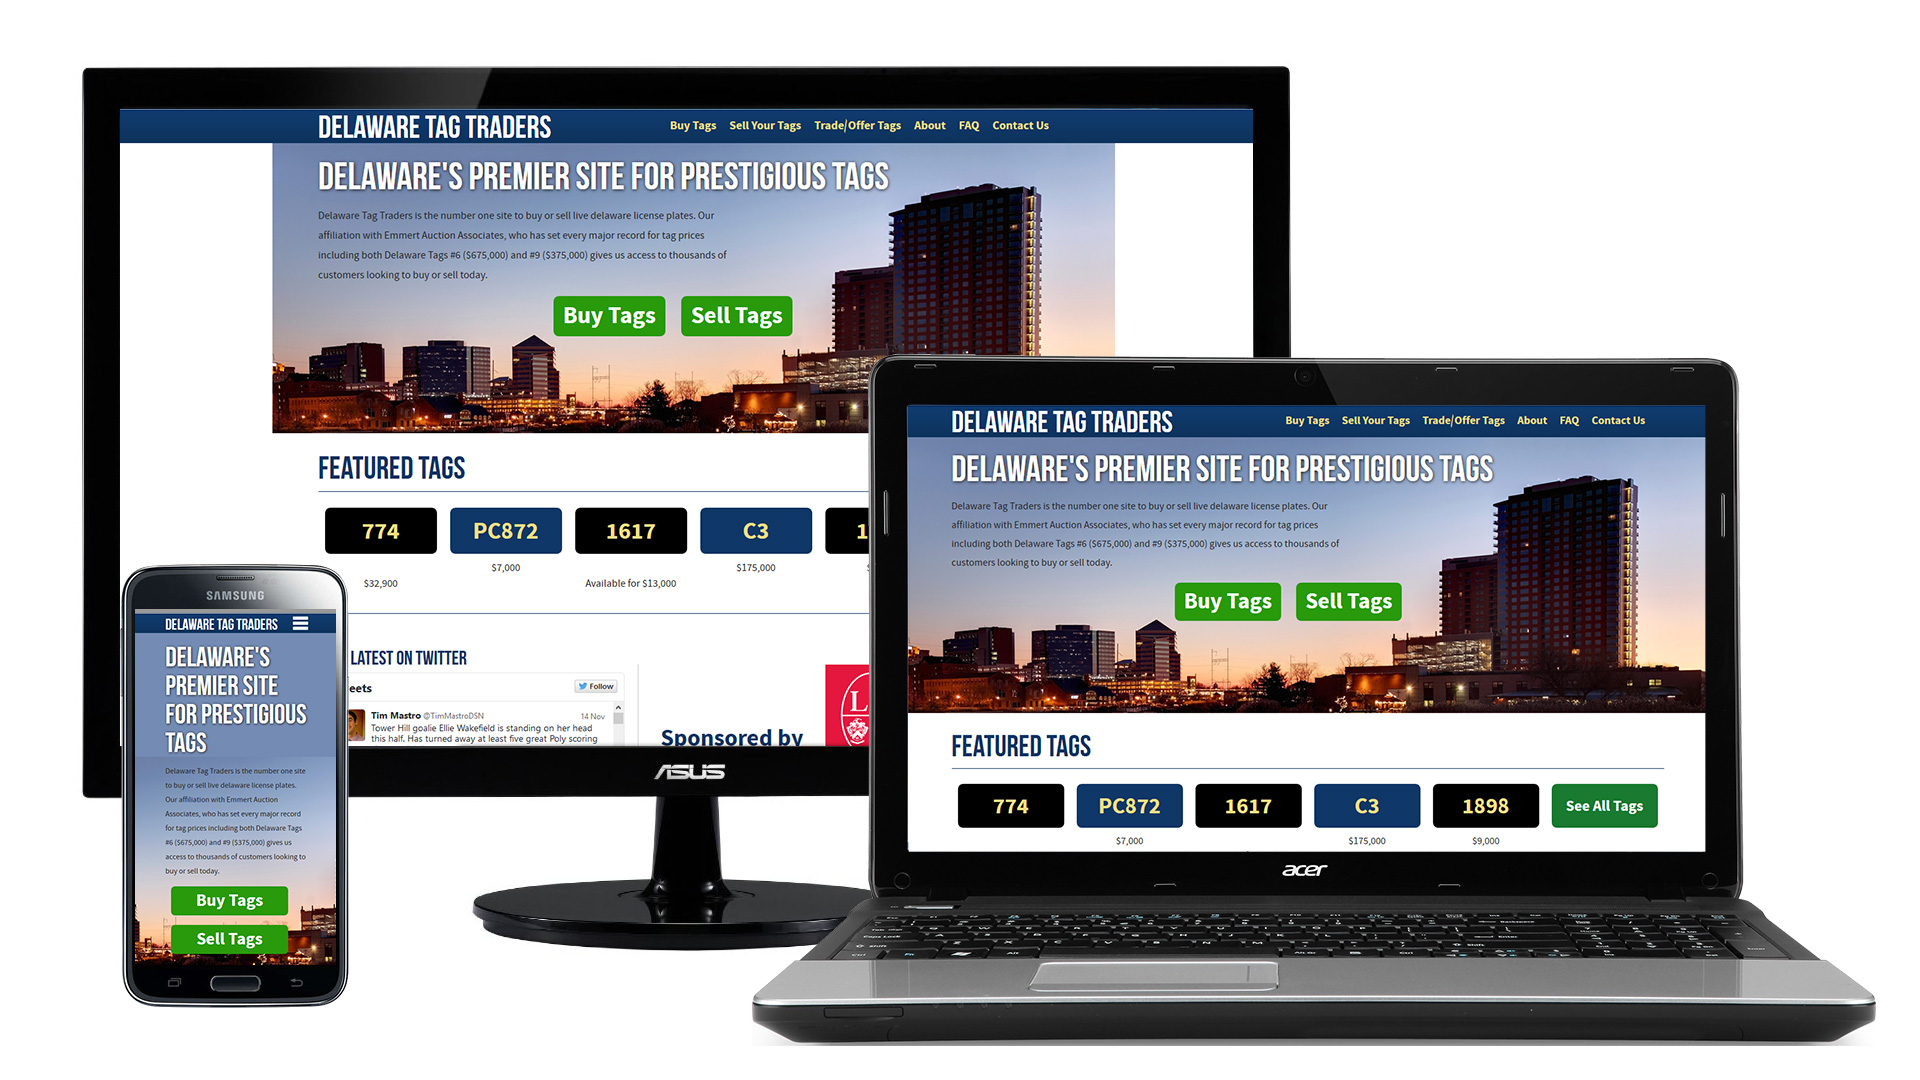 Delaware Tag Traders - Responsive Website Design